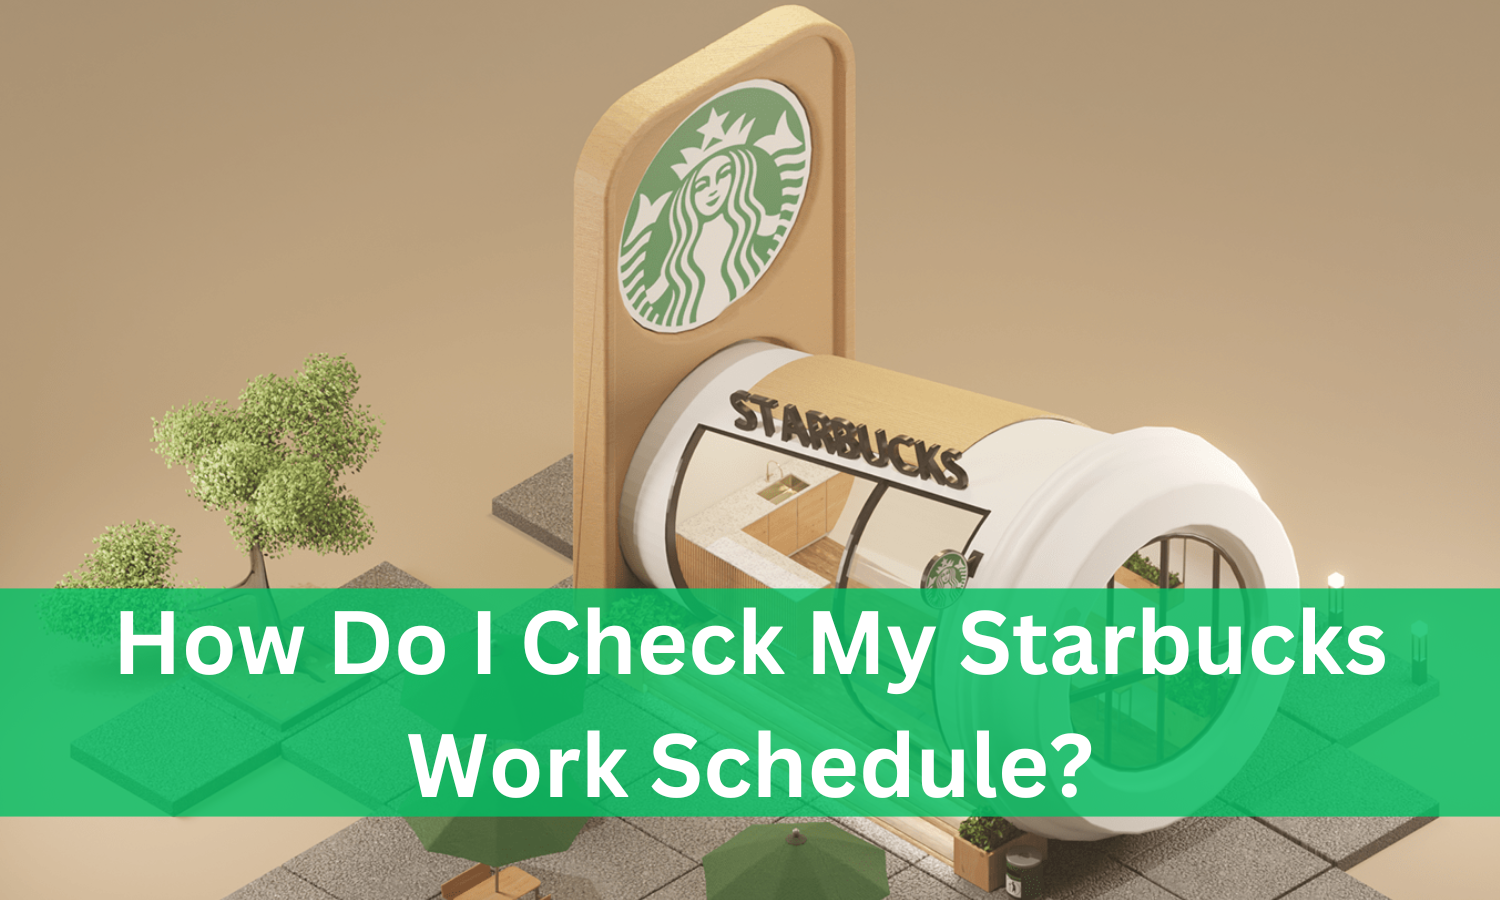 How Do I Check My Starbucks Work Schedule?